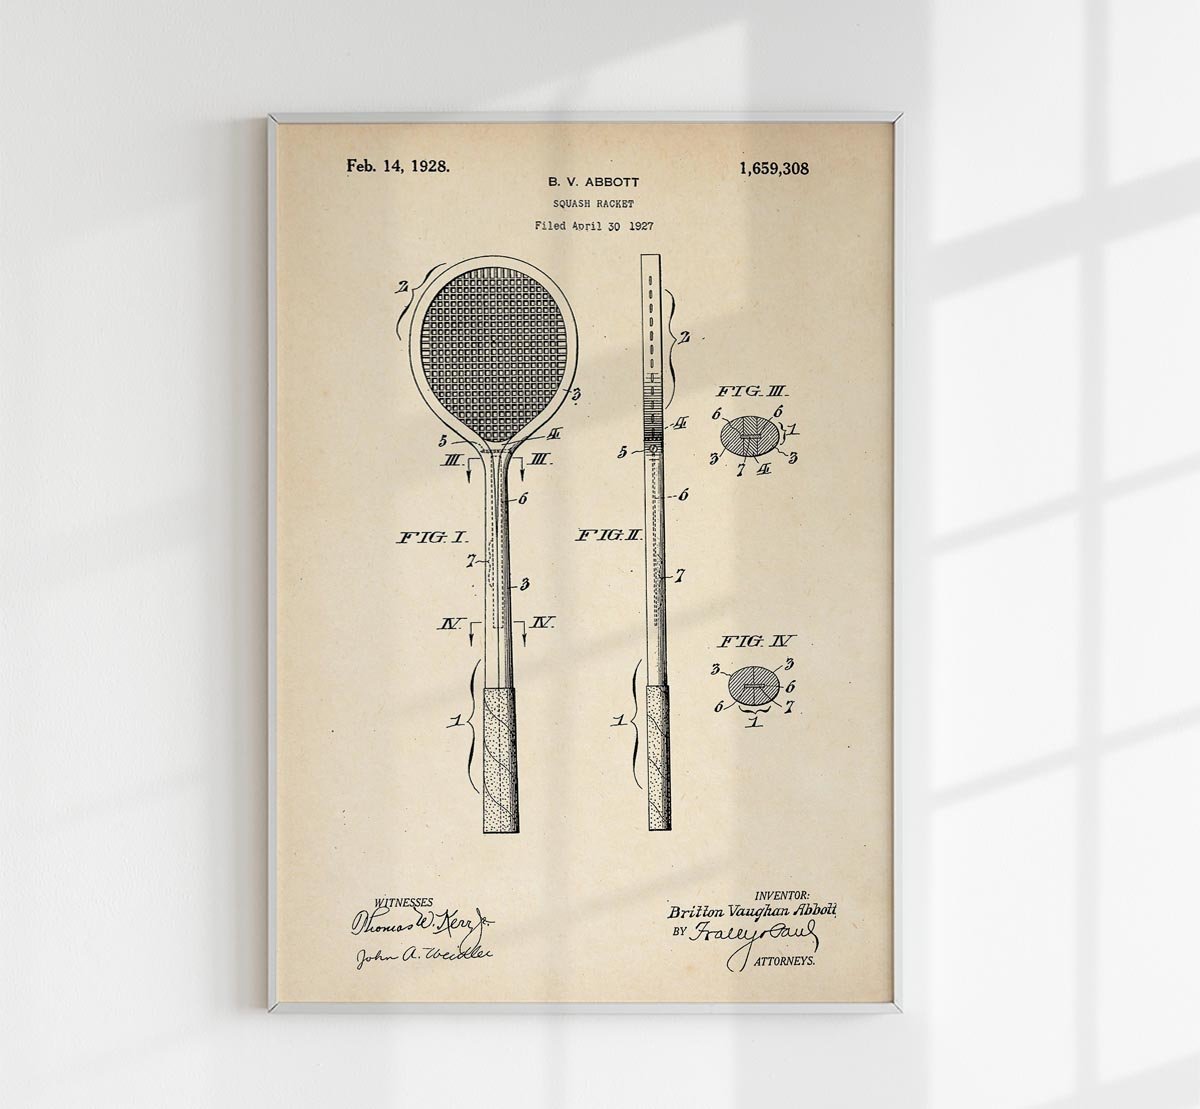 Squash Racket Patent Poster